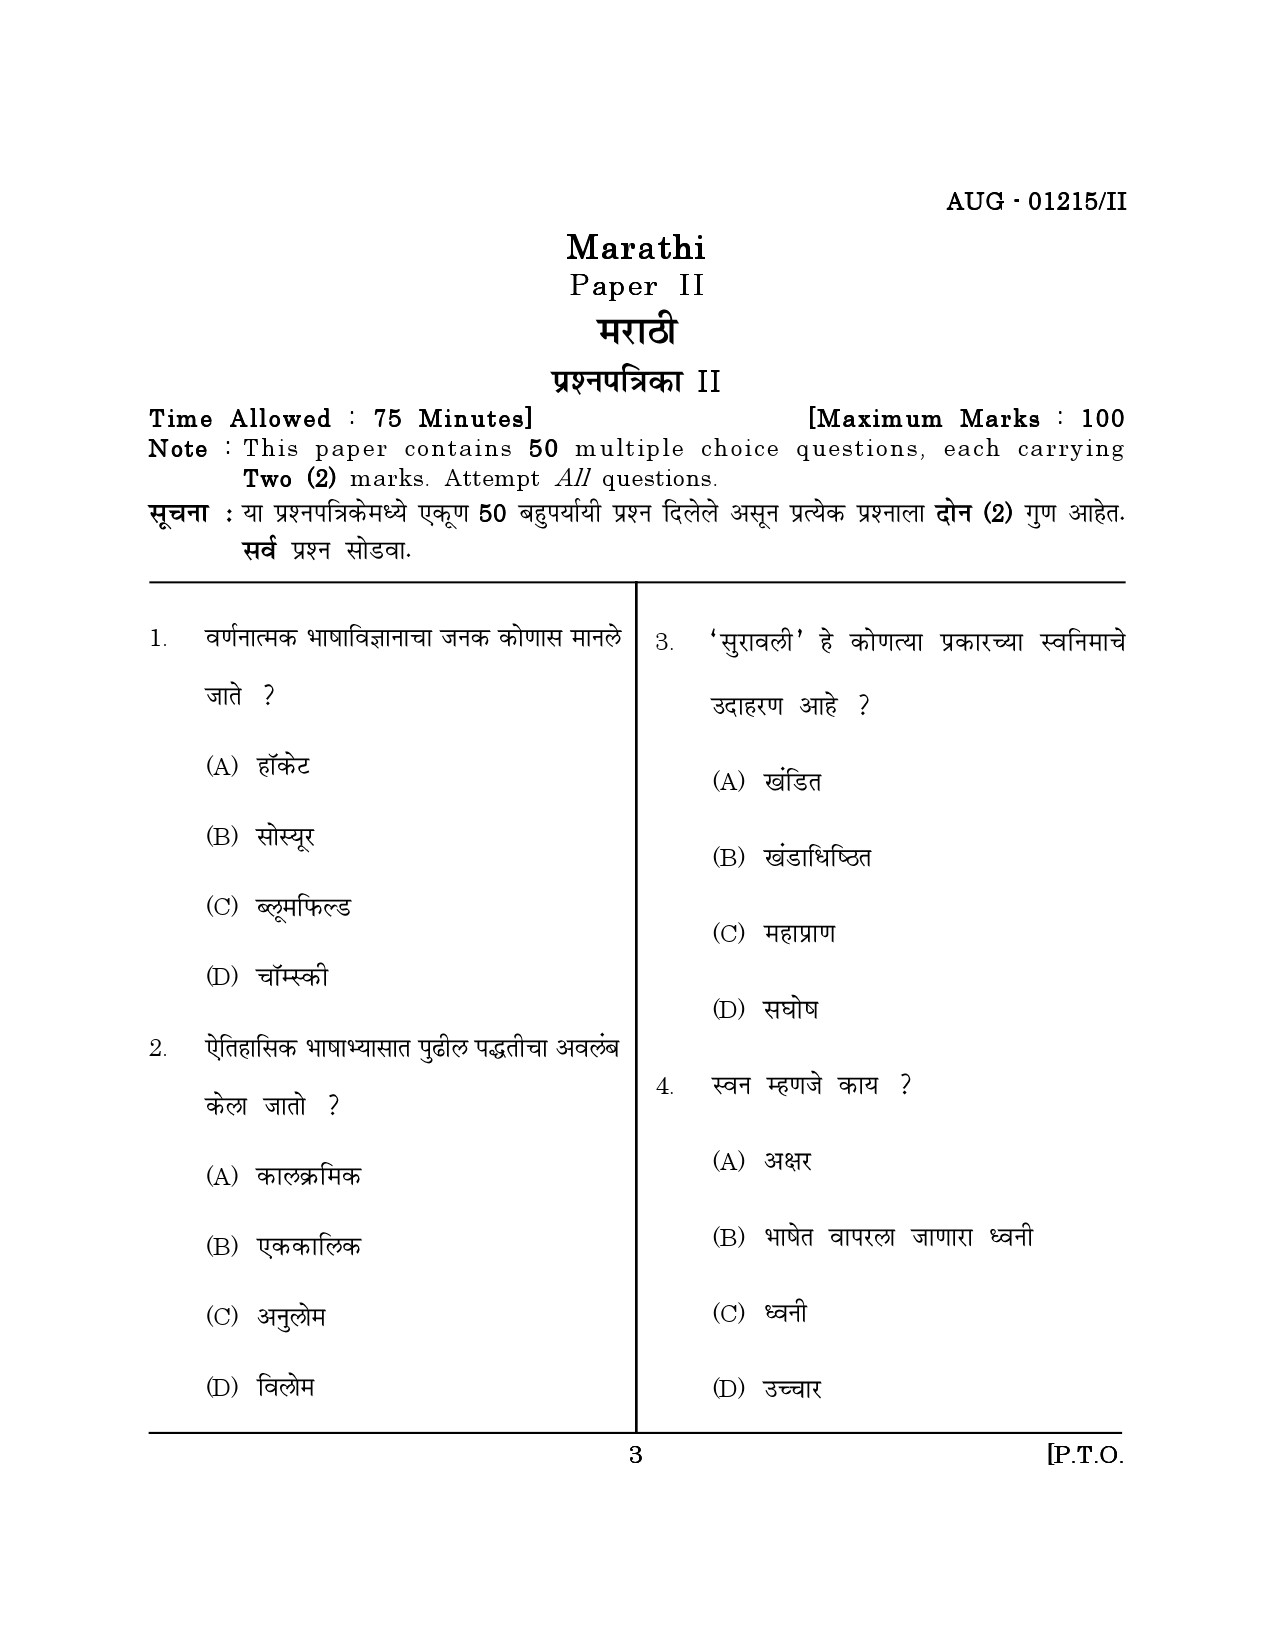 Maharashtra SET Marathi Question Paper II August 2015 2